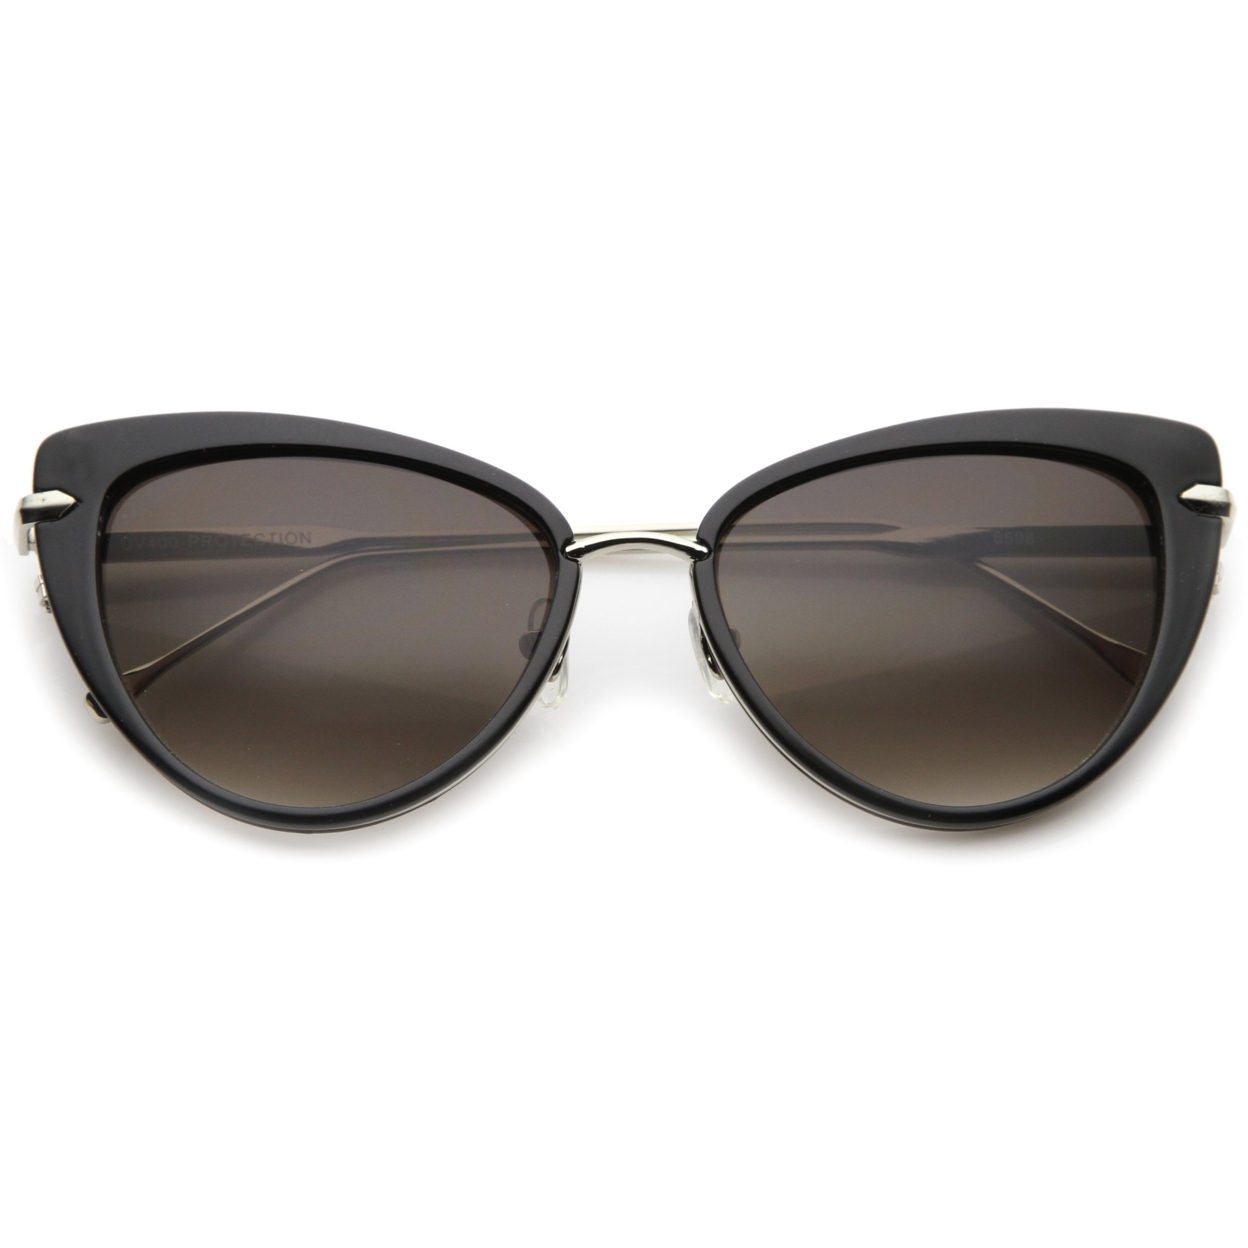 Women's Glam High Fashion Ultra Thin Metal Temple Cat Eye Sunglasses 55mm - Brown-Tortoise / Amber